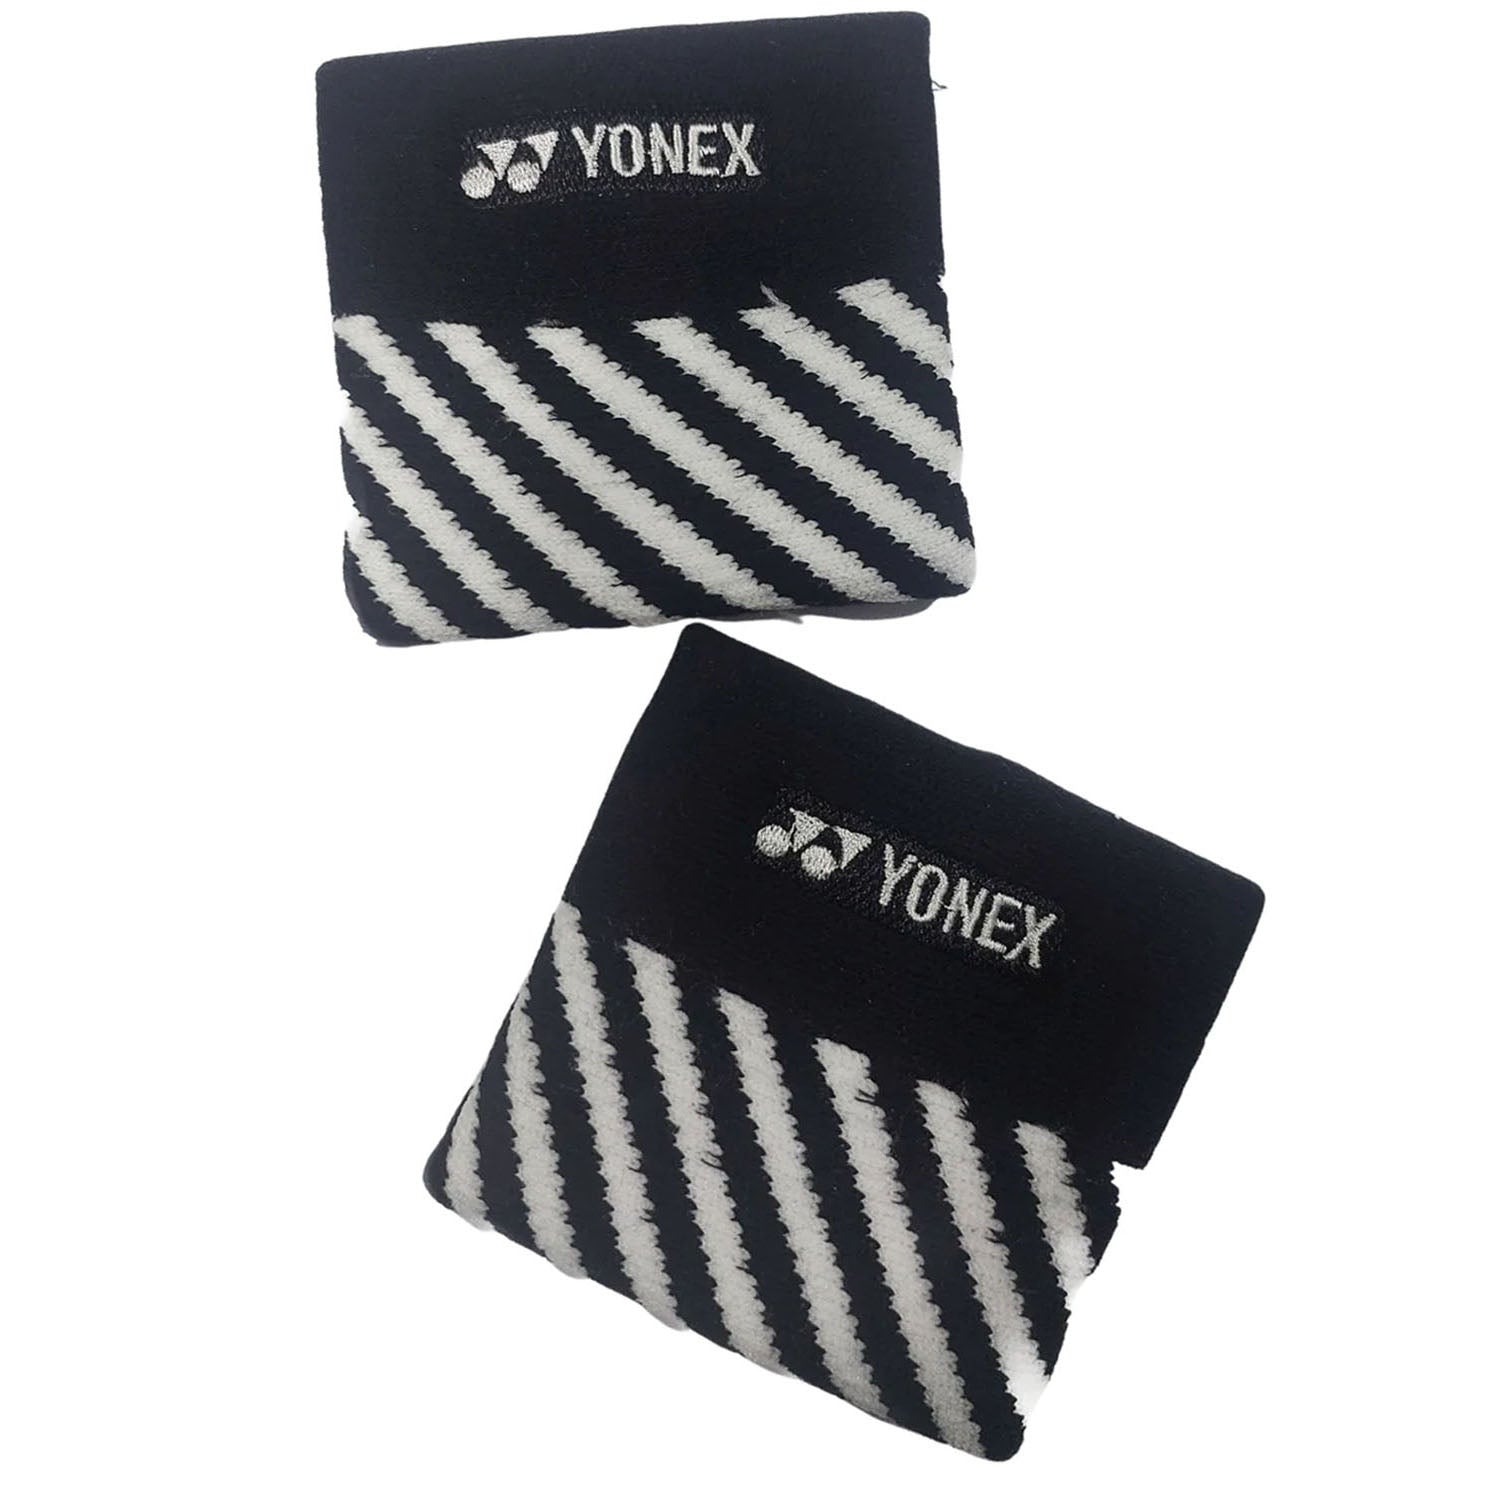 Yonex 08507 WB5 Wrist Band - Best Price online Prokicksports.com